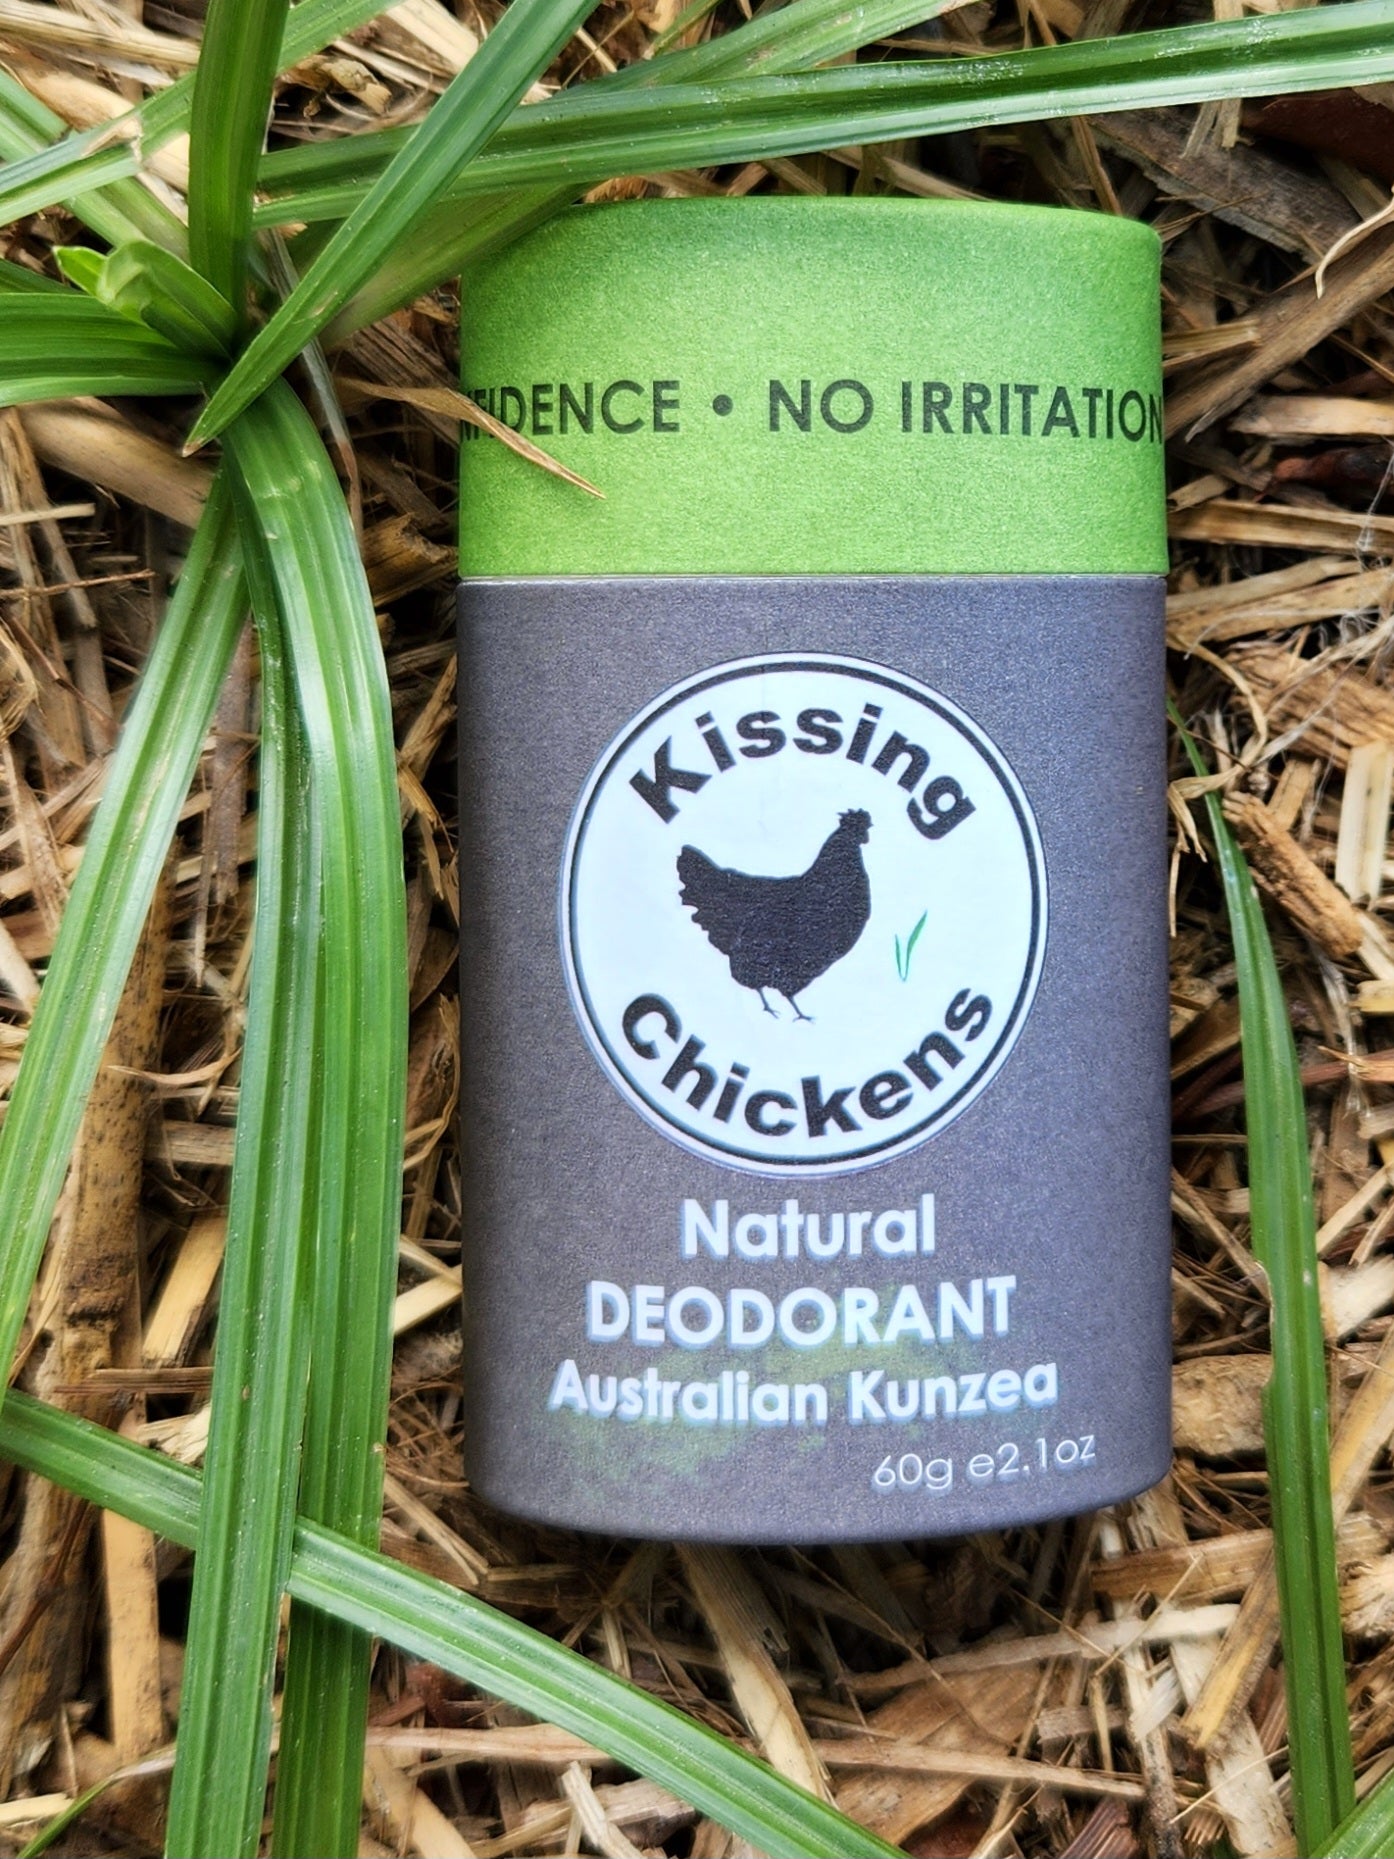 Kissing Chickens Natural Bicarb-Free Deodorant Stick - 60g Australian Kunzea